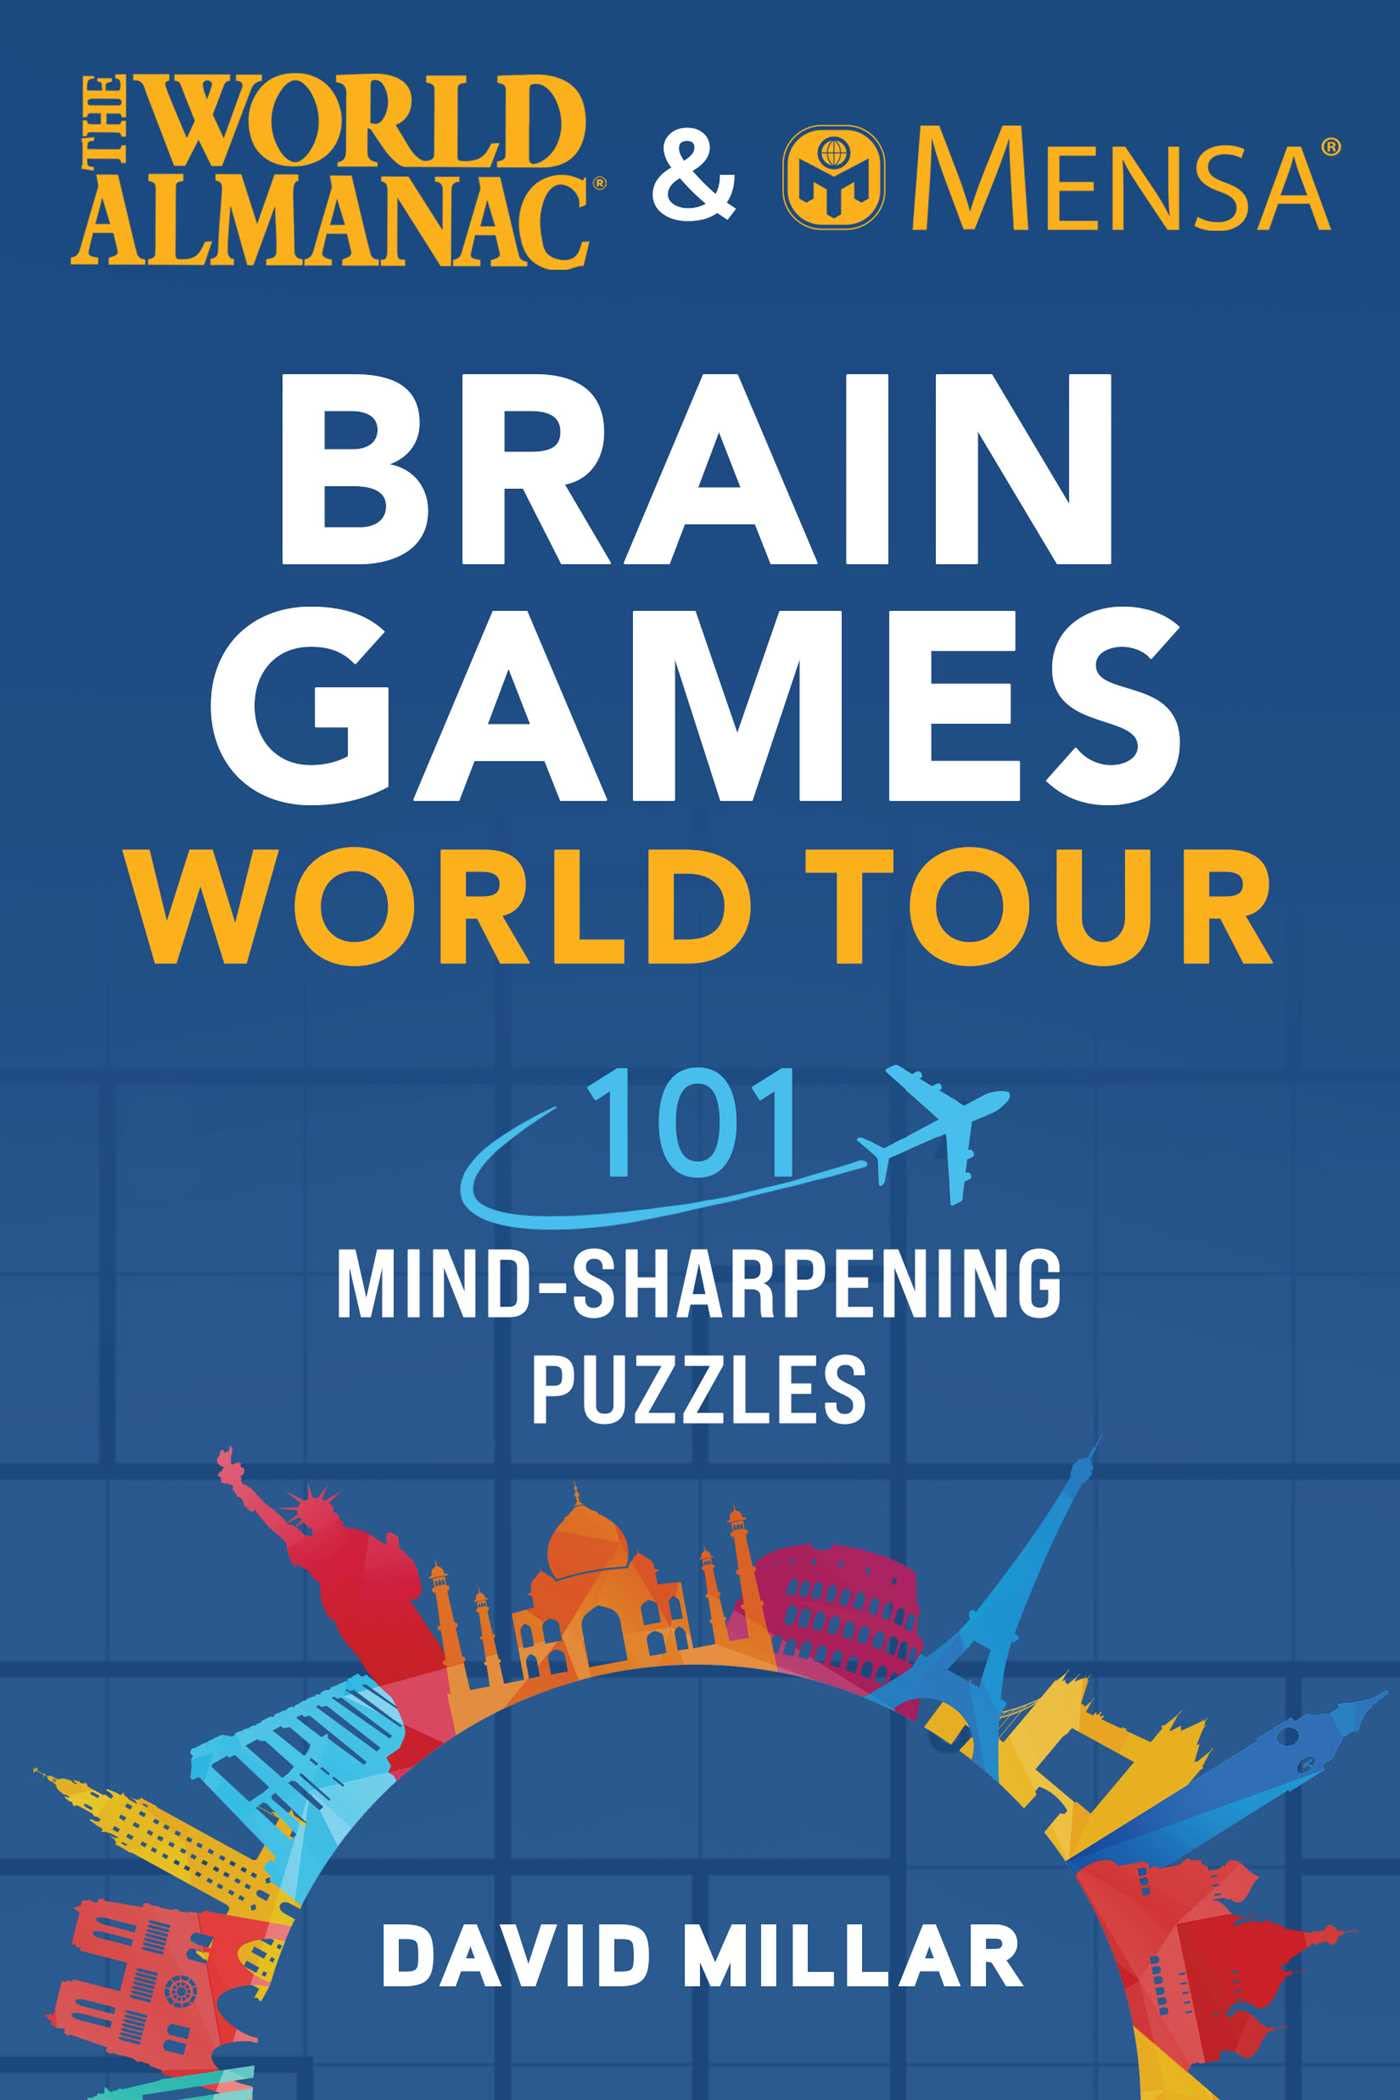 Cover of The World Almanac & Mensa Brain Games World Tour by David Millar